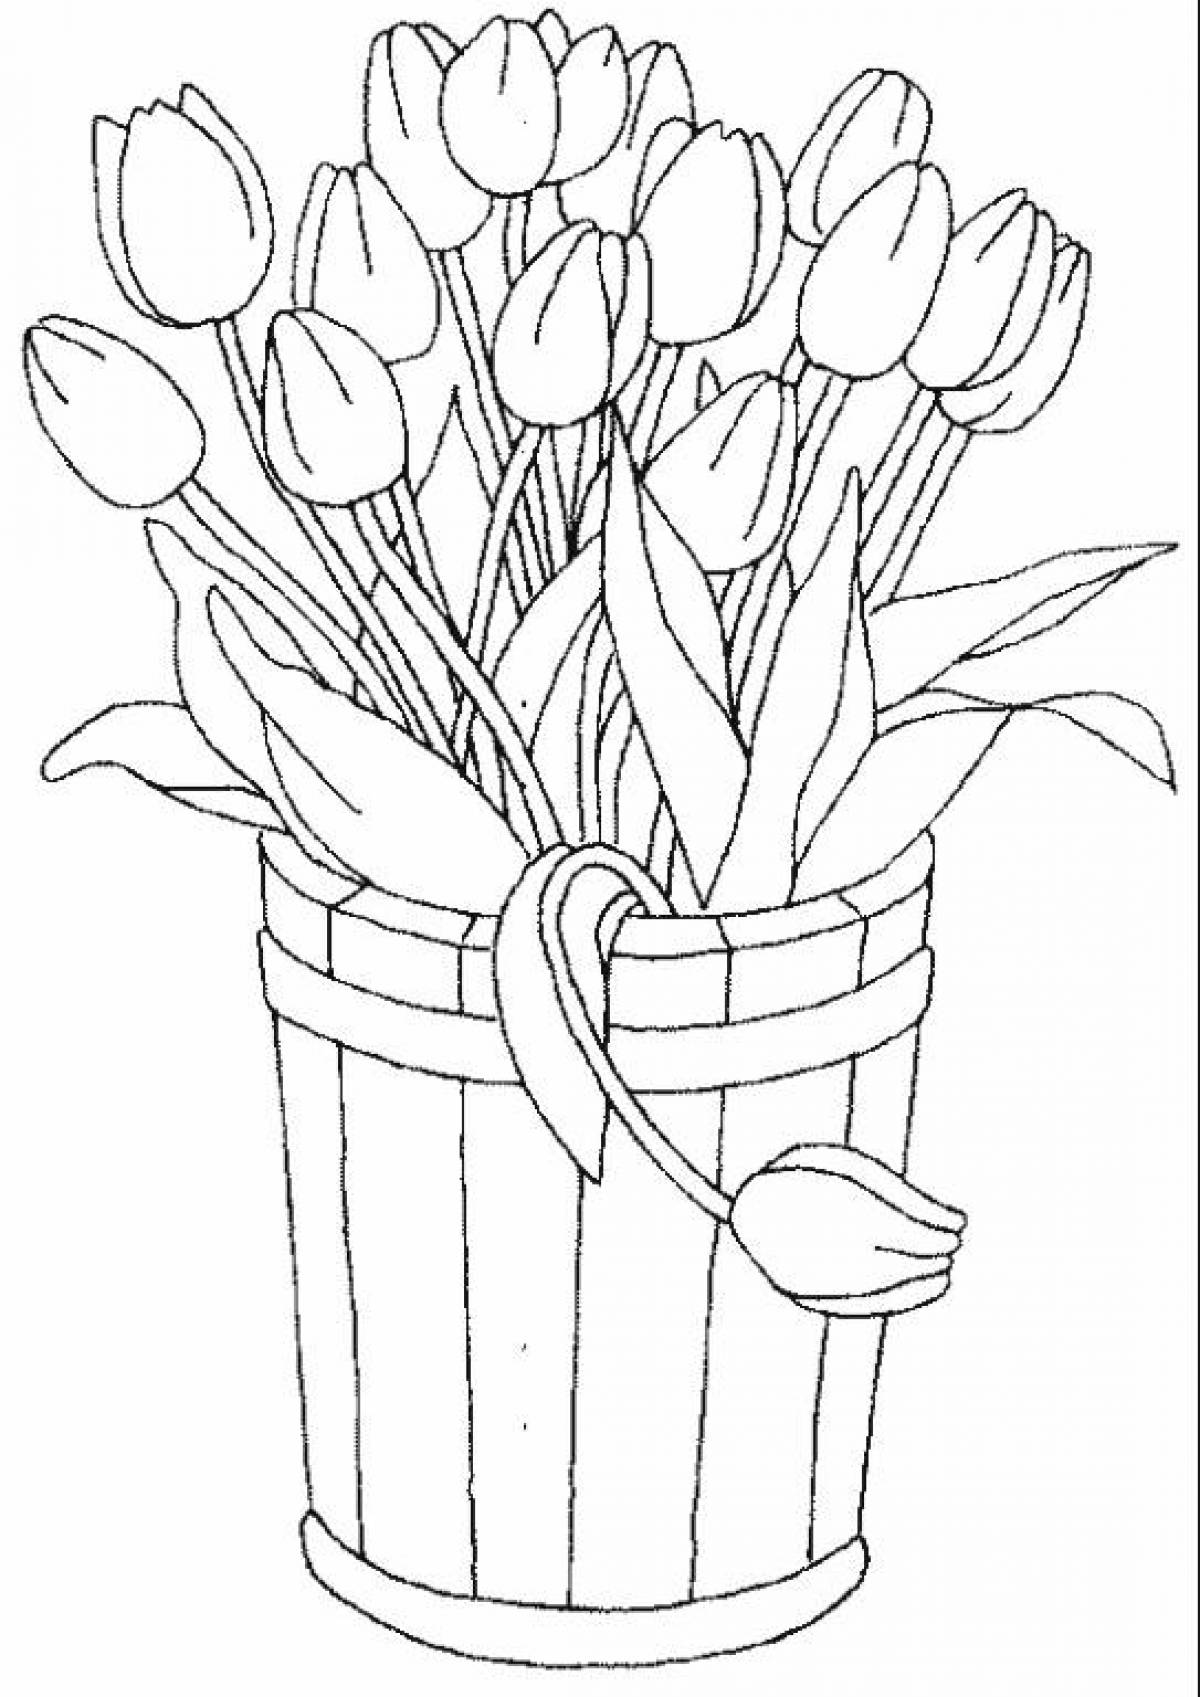 Tulips in a barrel